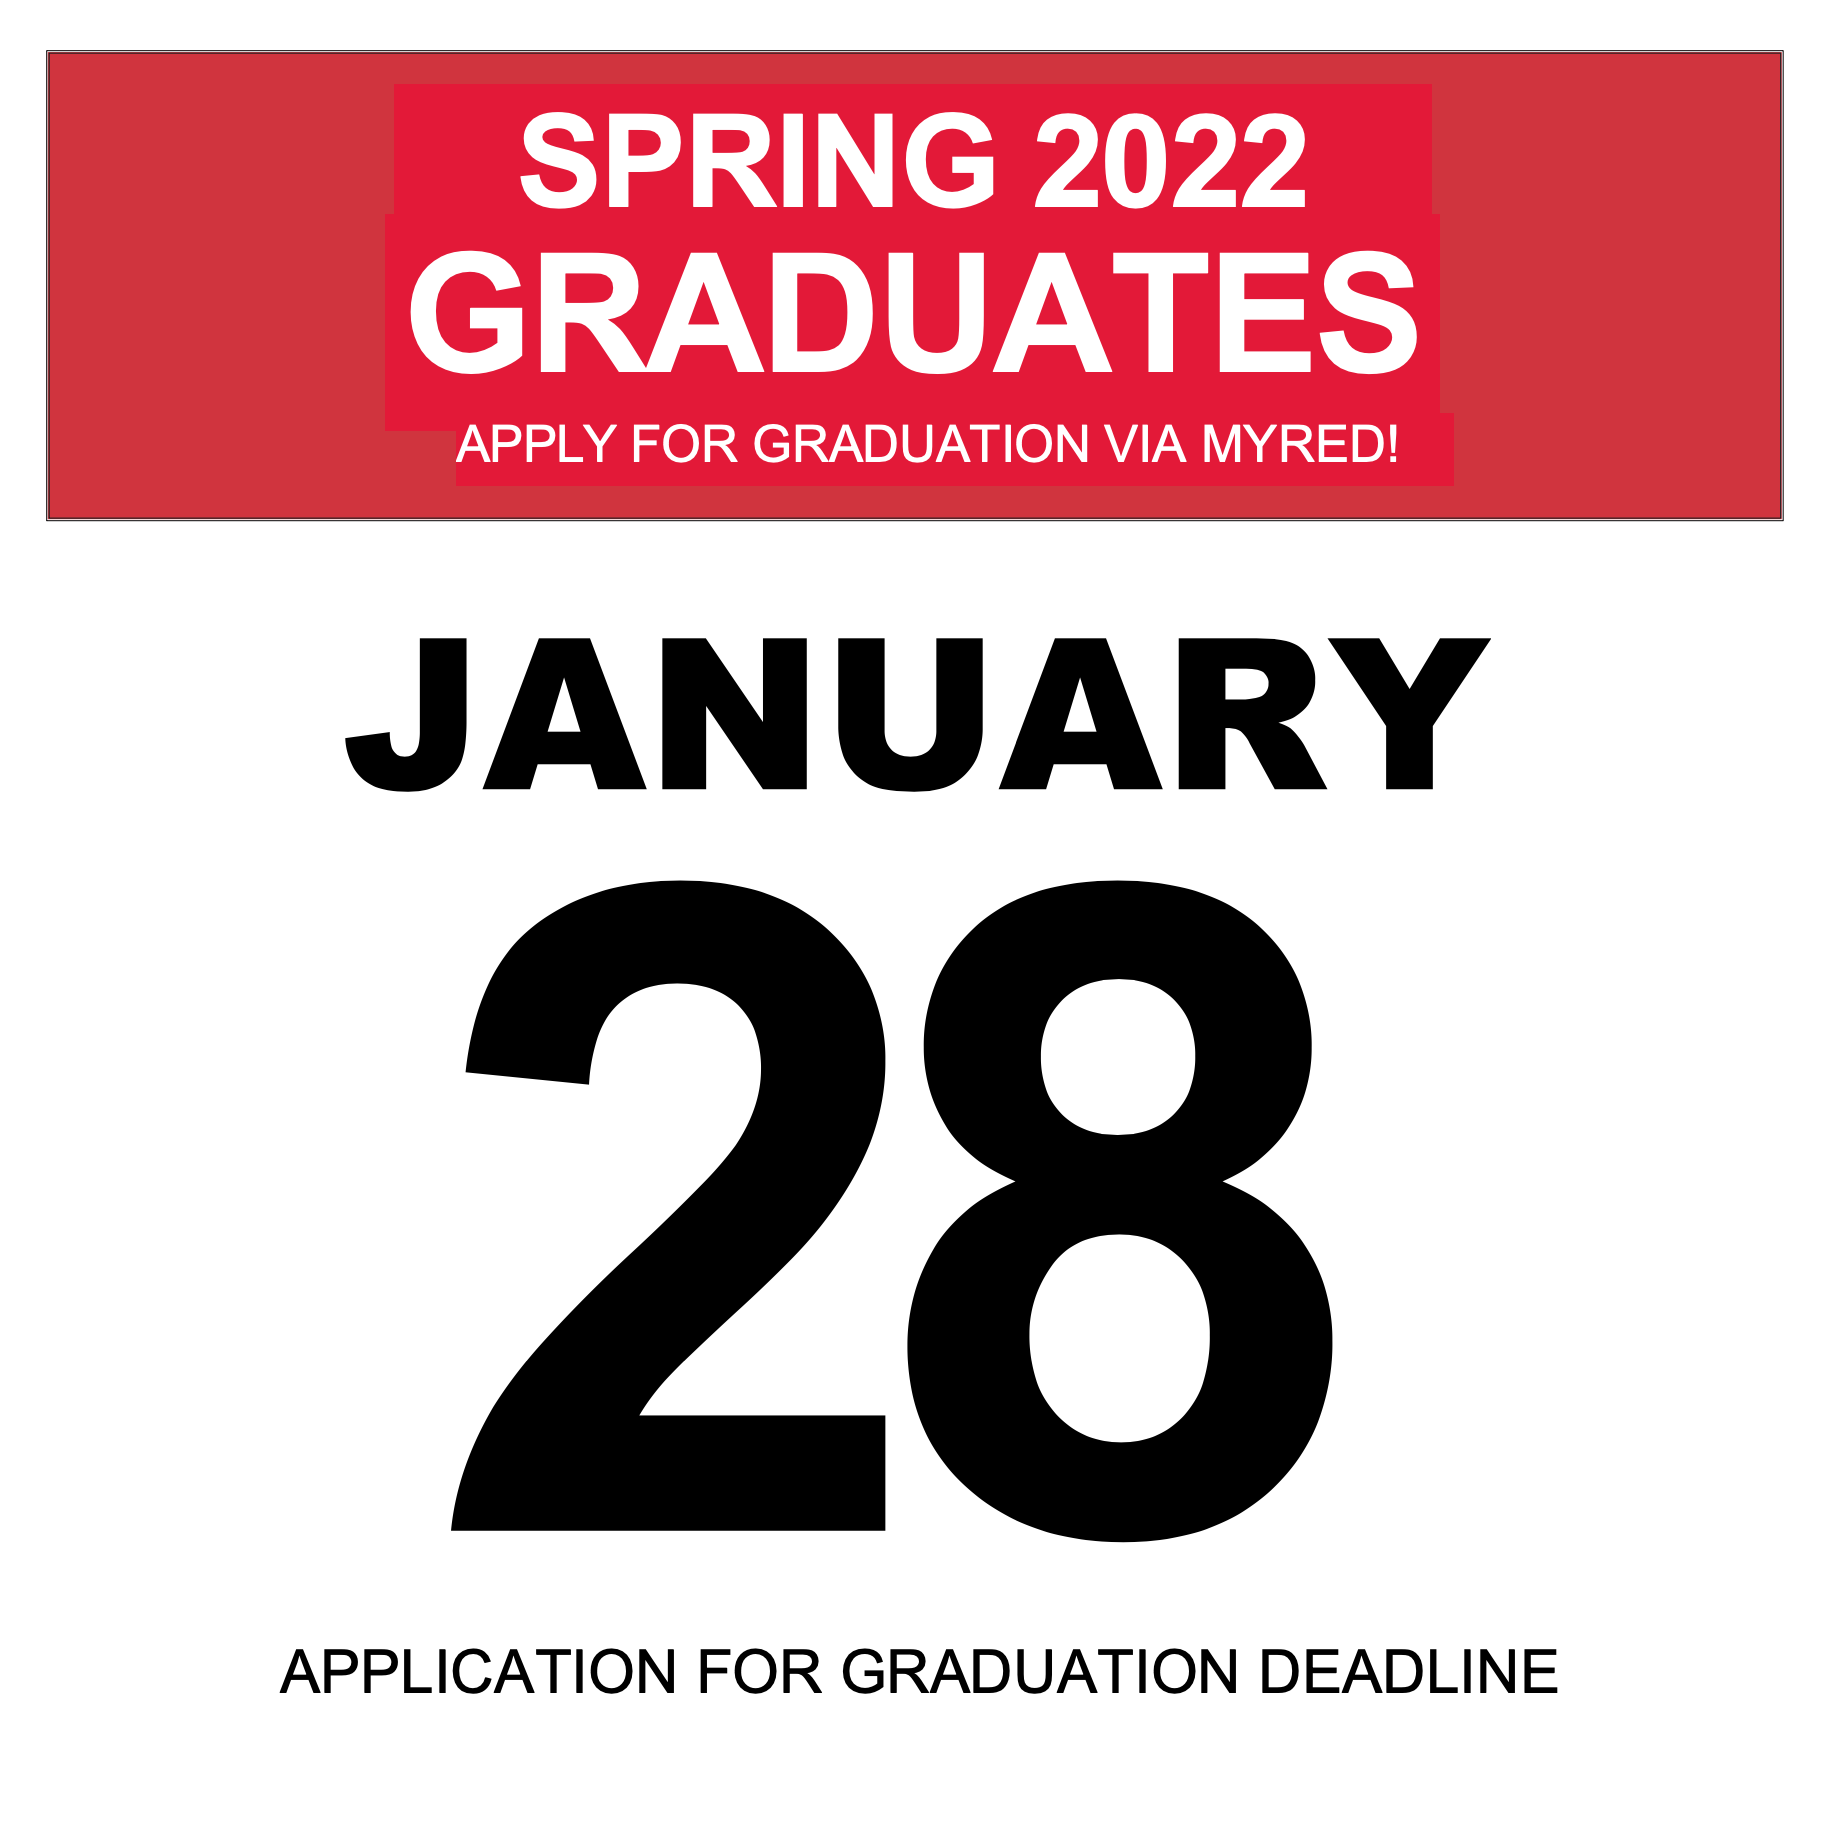 The Spring 2022 graduation application deadline is Jan. 28.